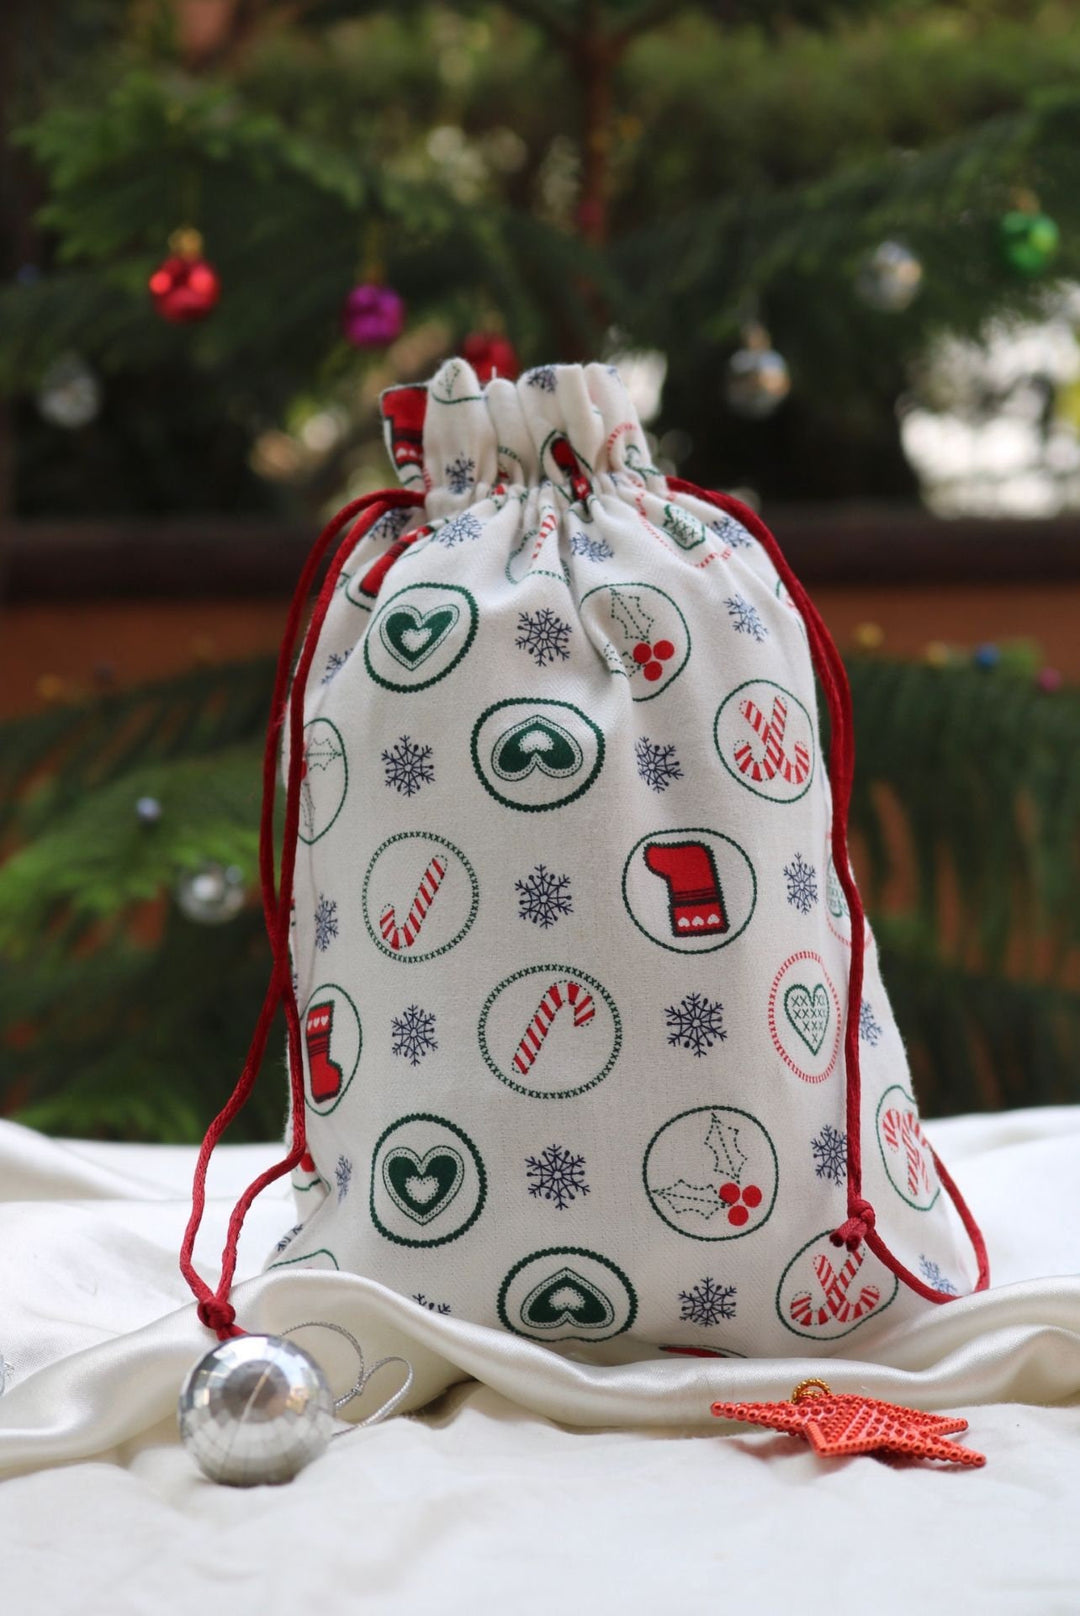 Colorful Cotton Gift Bag, Christmas Gift Tote, Reusable Storage Bag, Handmade Tote, Cute Drawstring Bag, Cotton Gift Wrap,Thanks Giving Gift